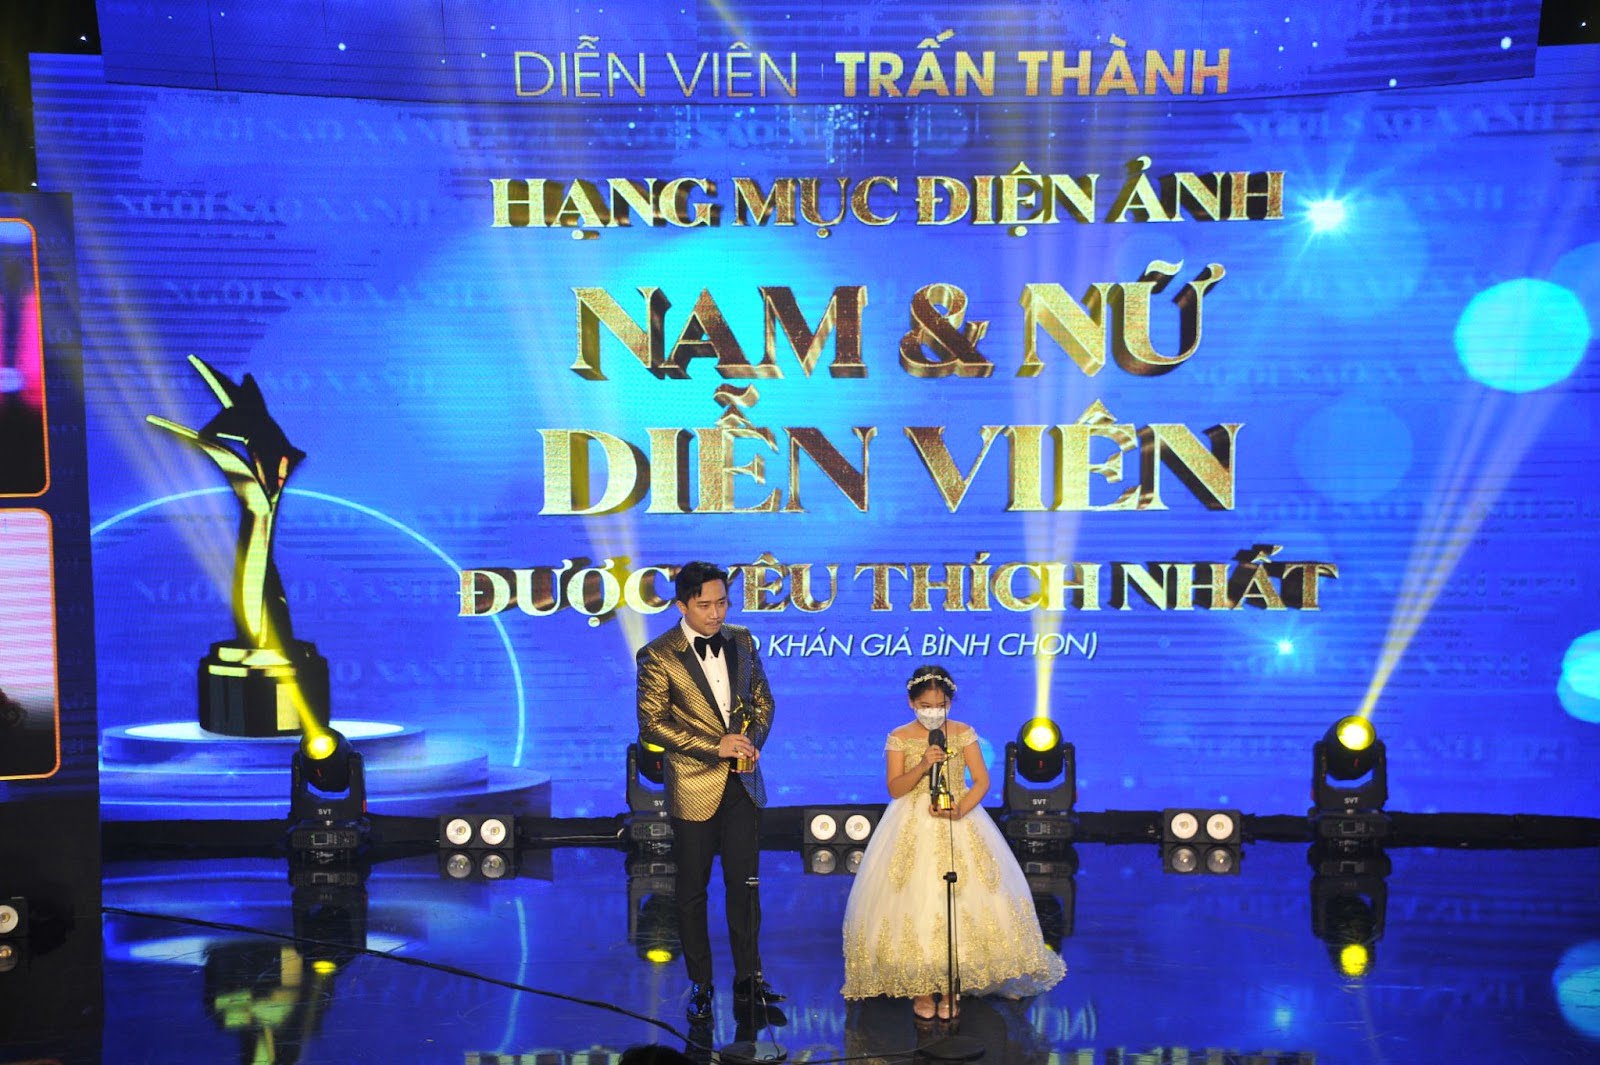 Tran Thanh Bao Tien